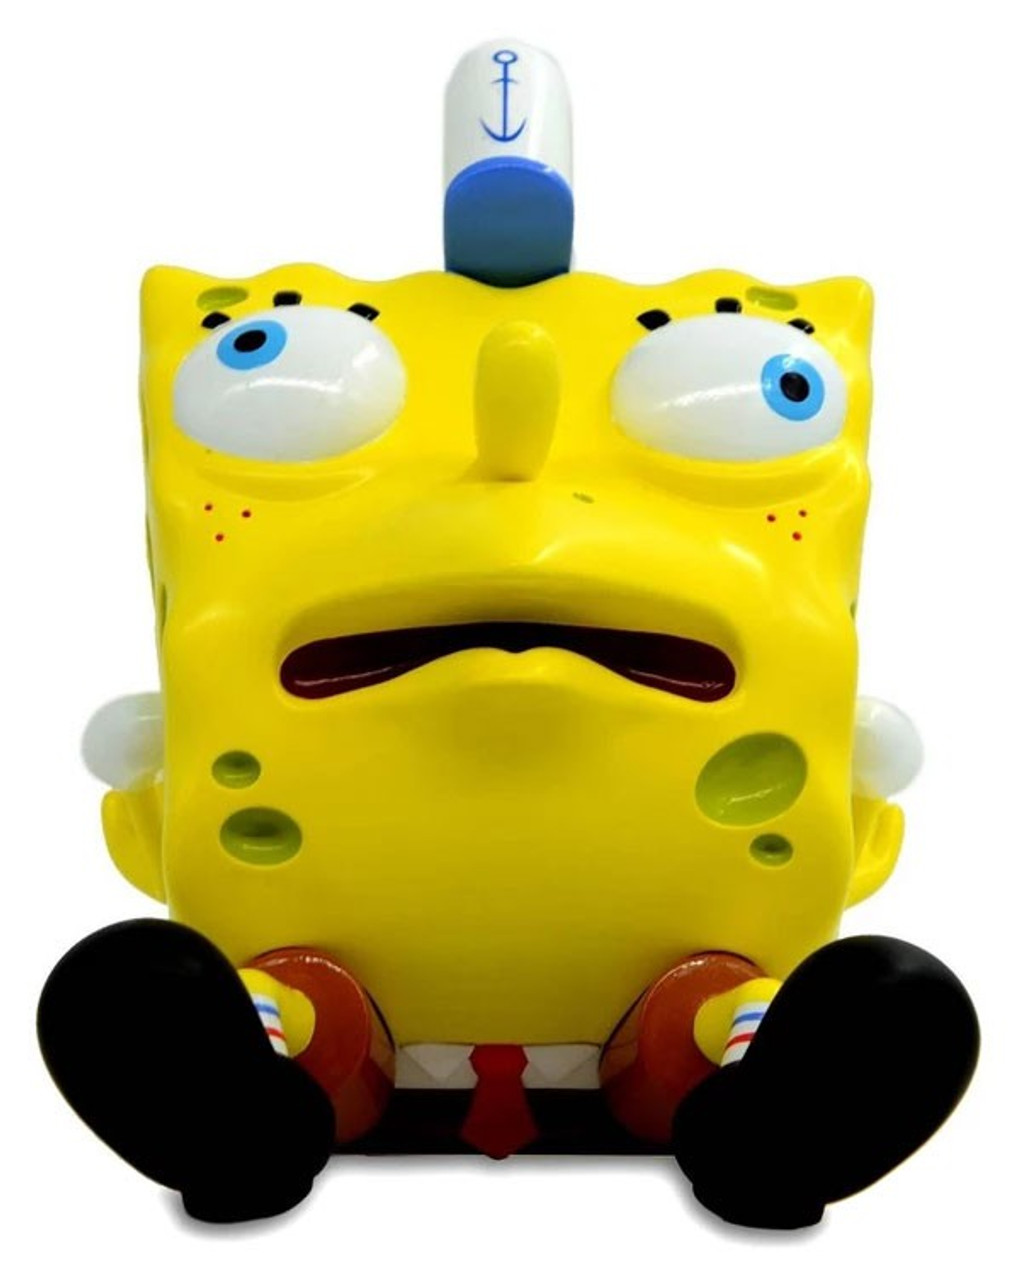 Spongebob Squarepants Vinyl Figures Memes From Youtoo - vrogue.co